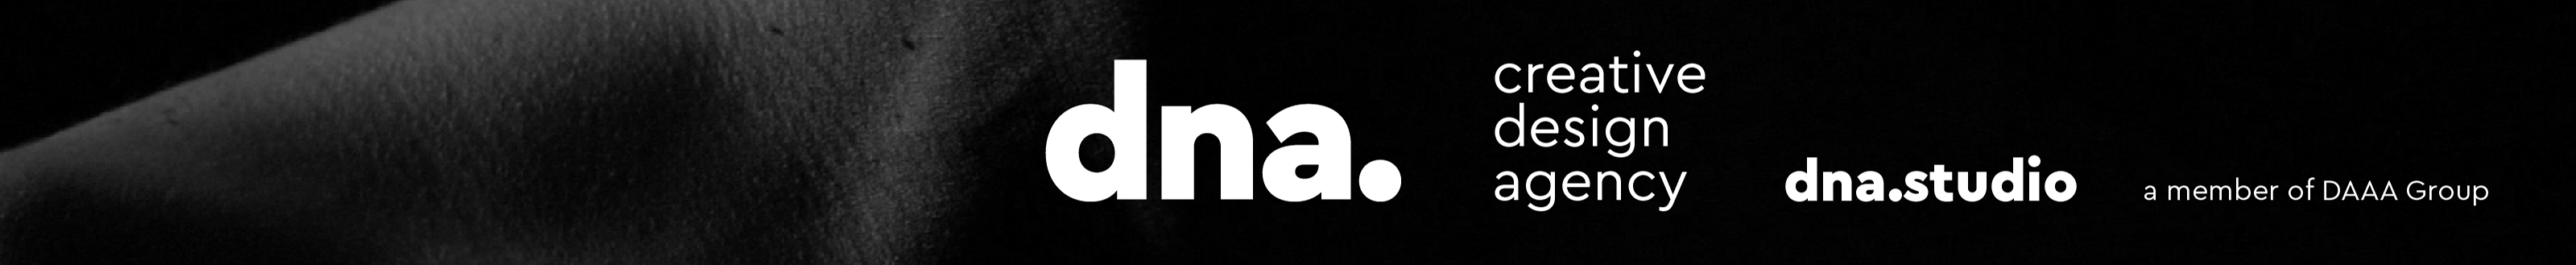 dna studio's profile banner